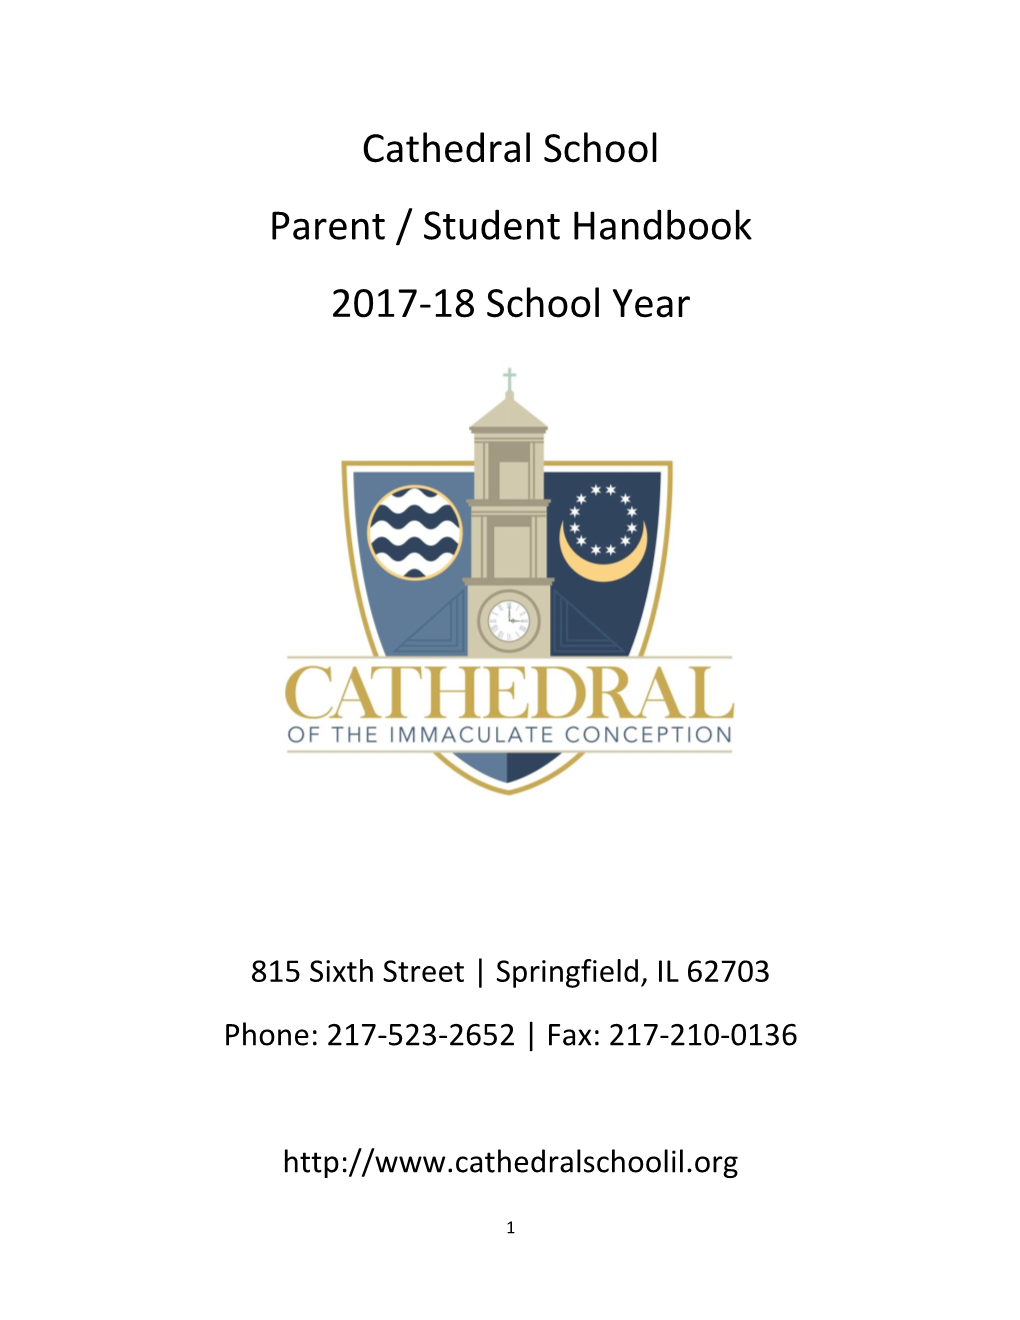 Cathedral School Parent / Student Handbook 2017-18 School Year